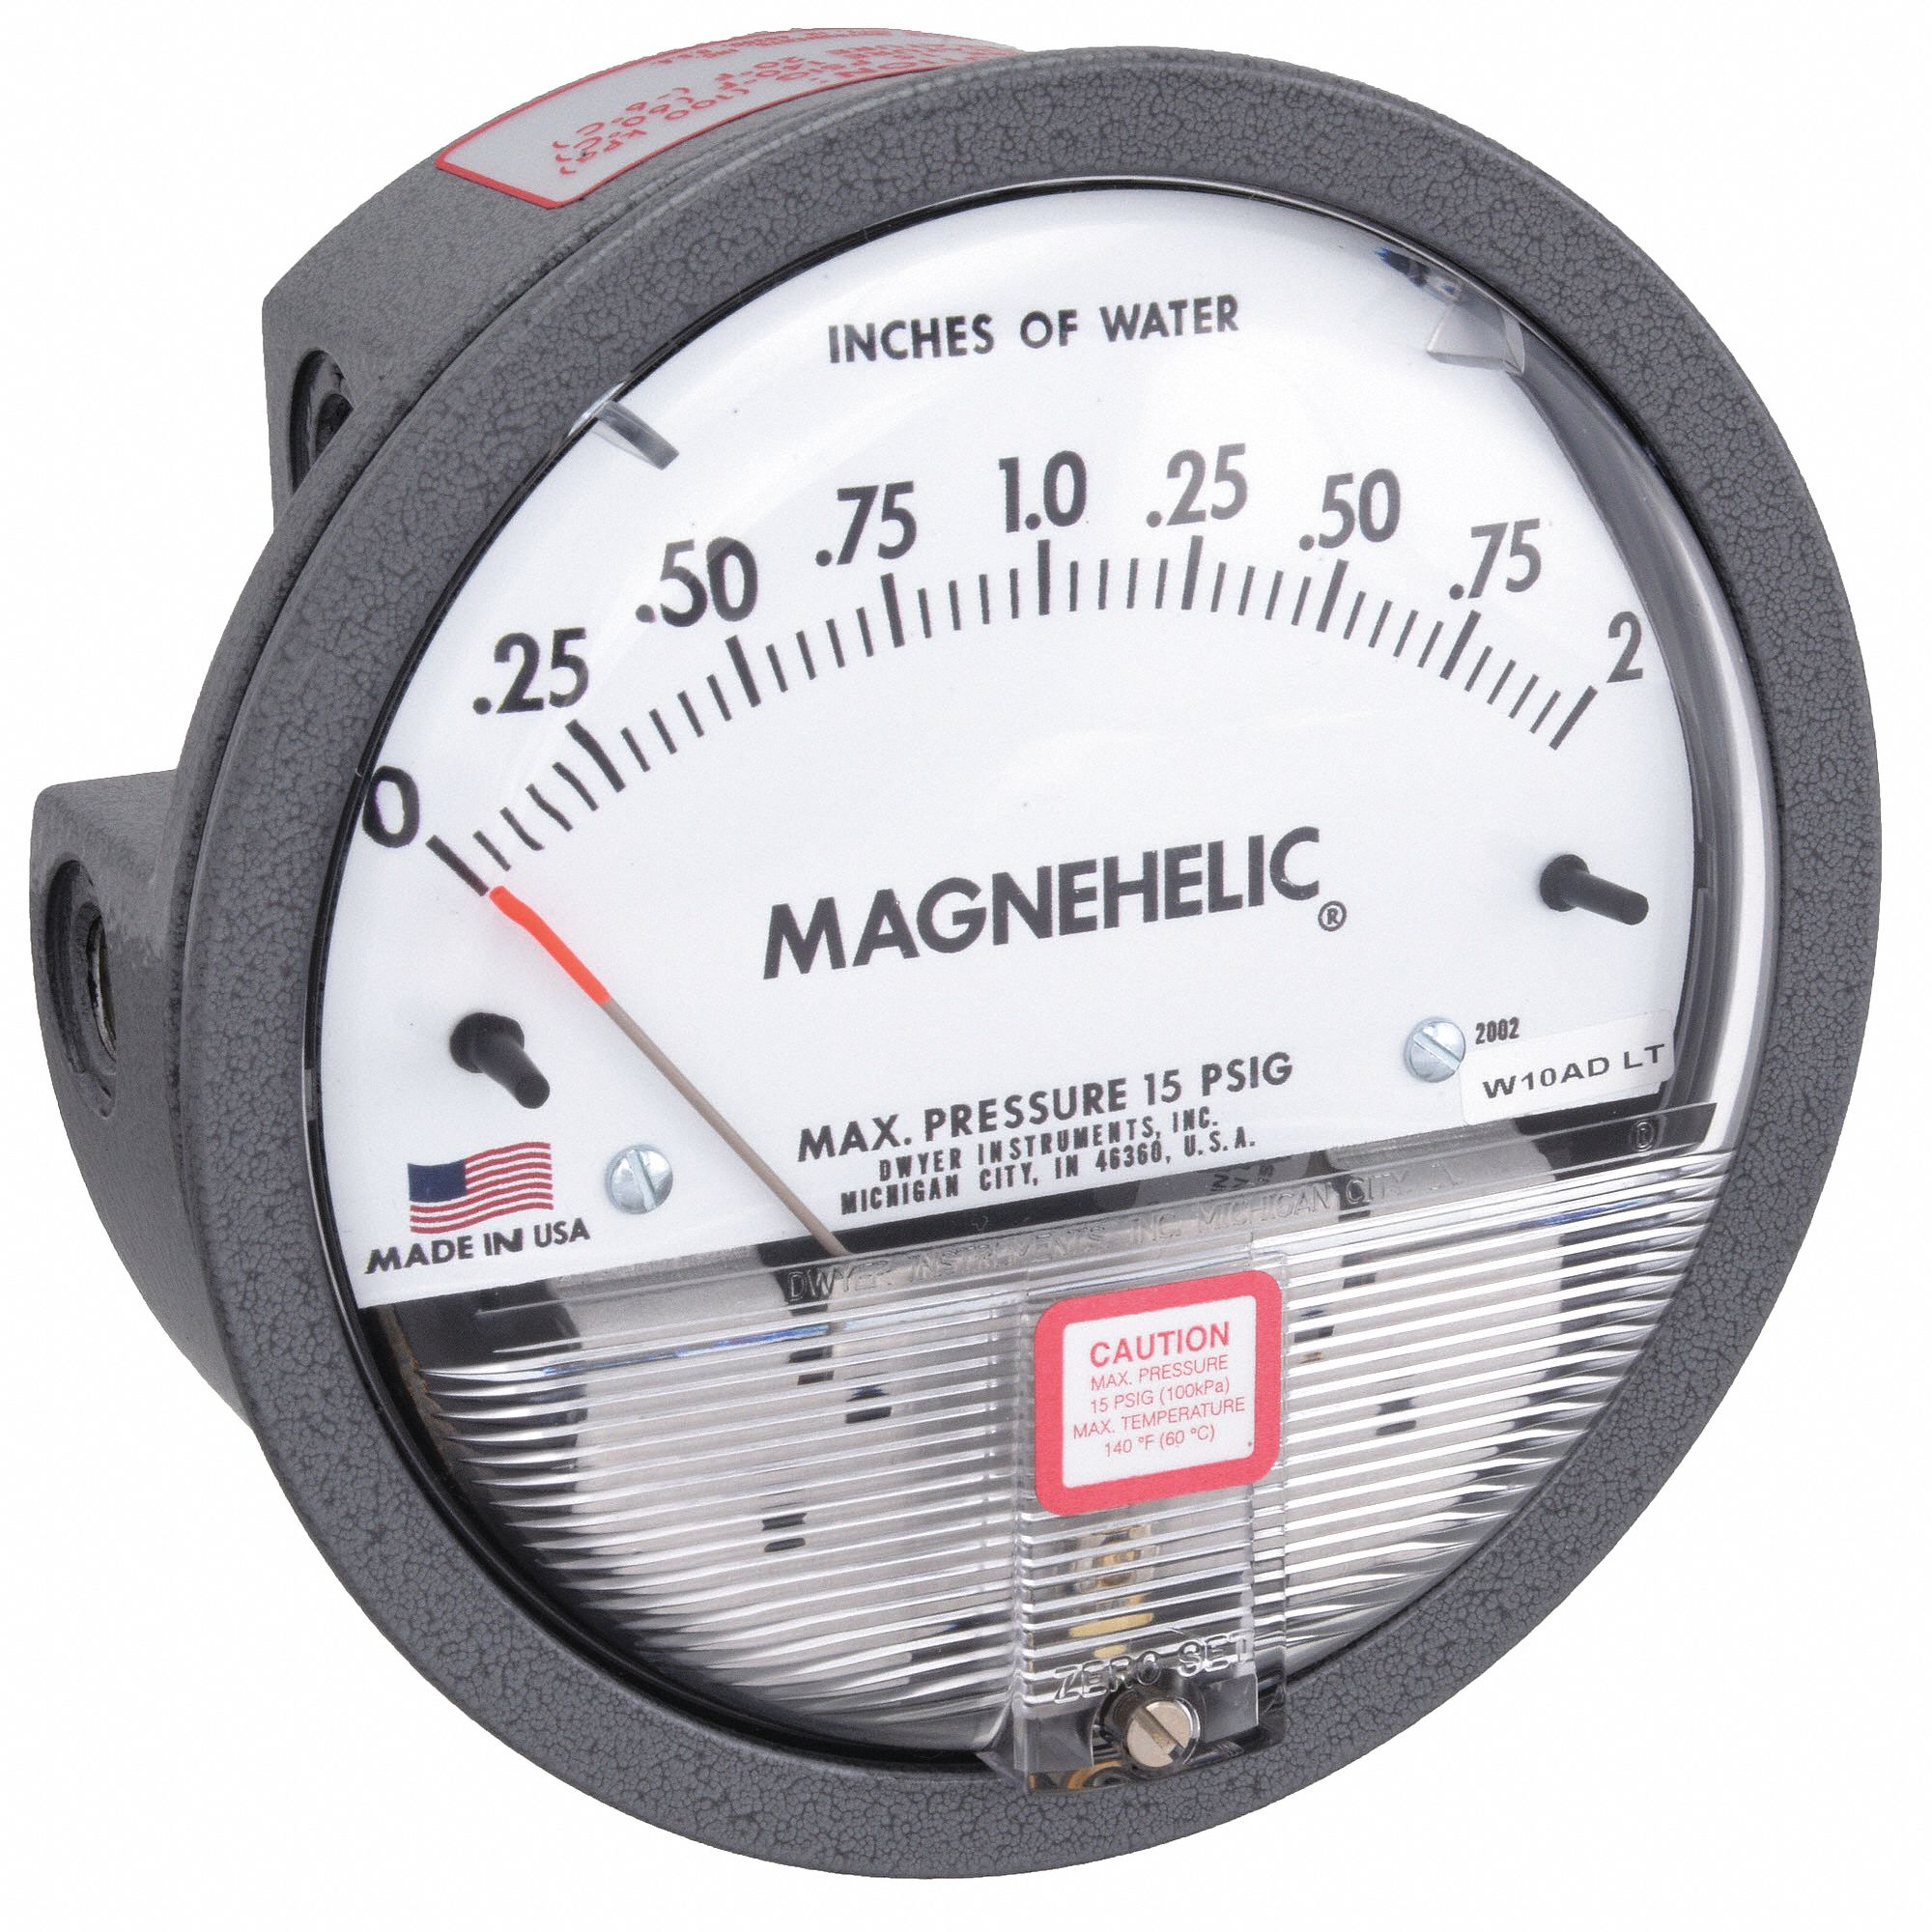 15-0-15in-h2o 1/8in Npt Pressure Gauge Dwyer 2330 Magnehelic 4-1/2in 